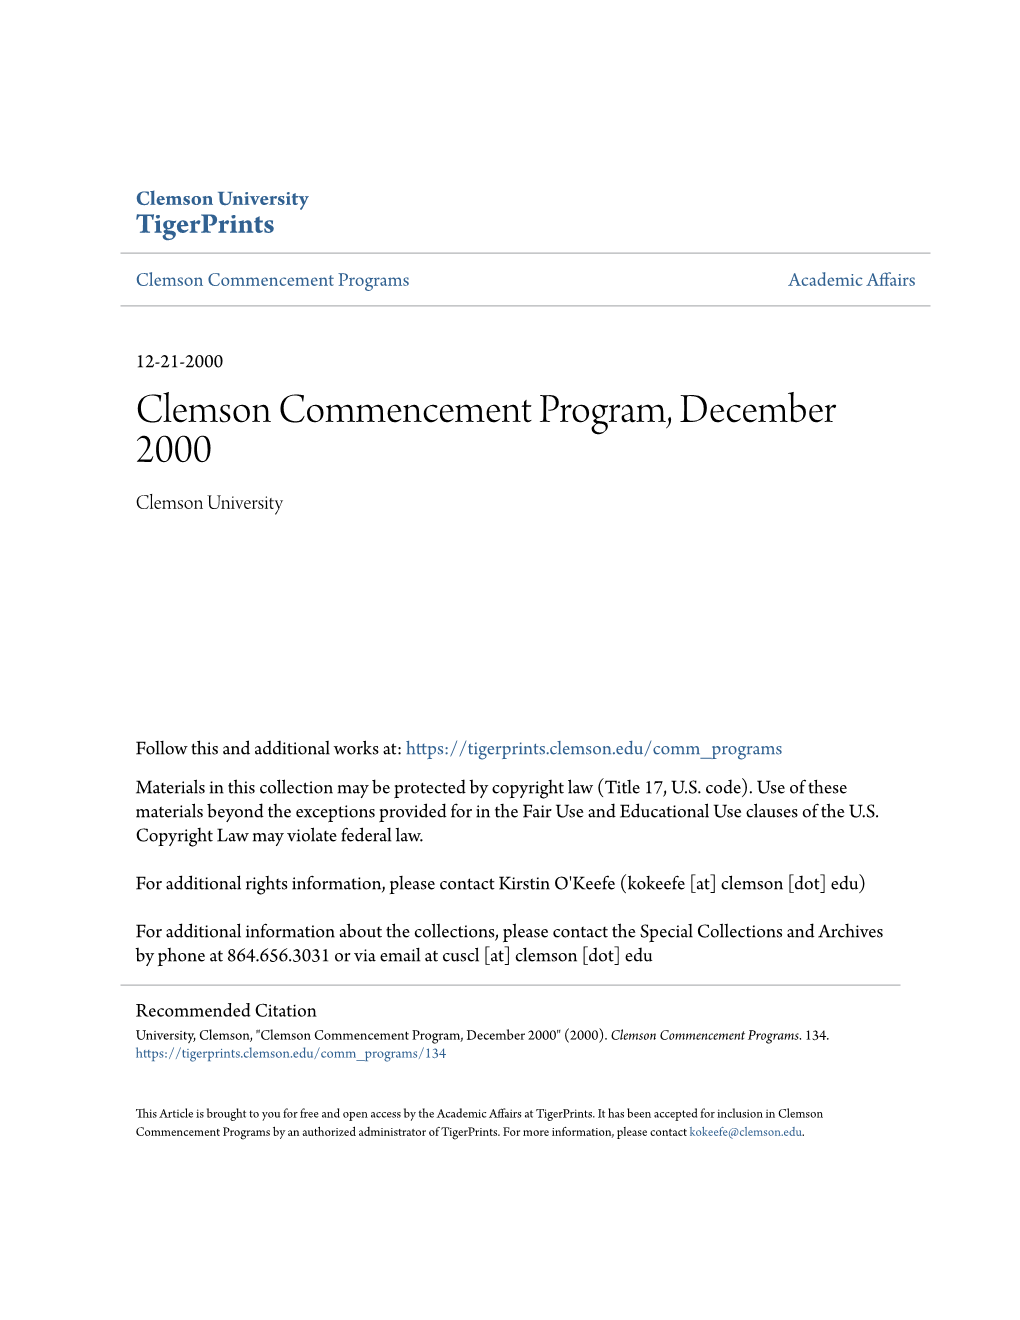 Clemson Commencement Program, December 2000 Clemson University